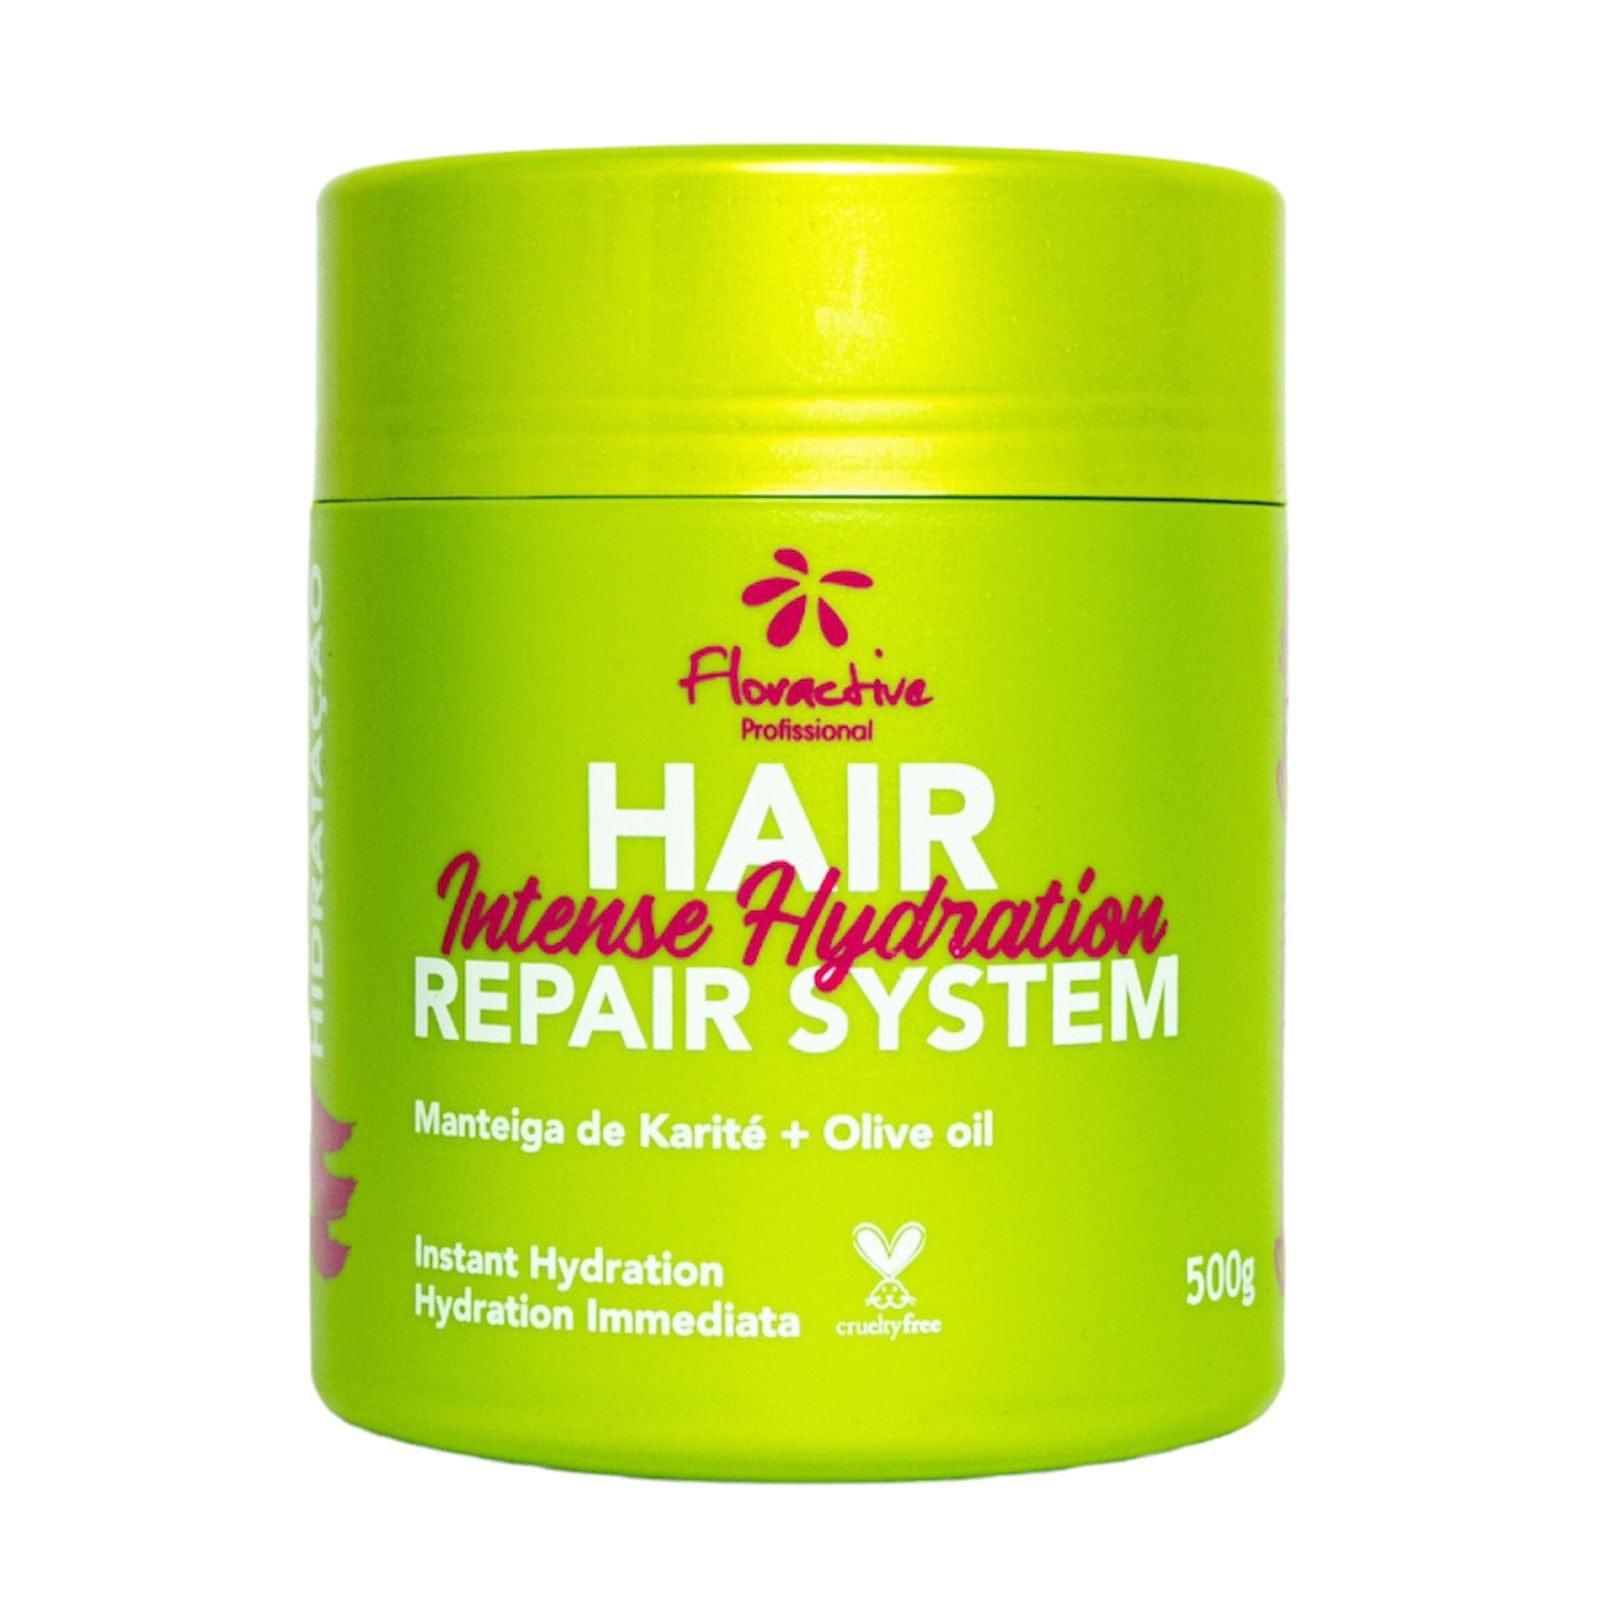 Floractive Hair Intense Hydration Repair System Hair Mask 500g